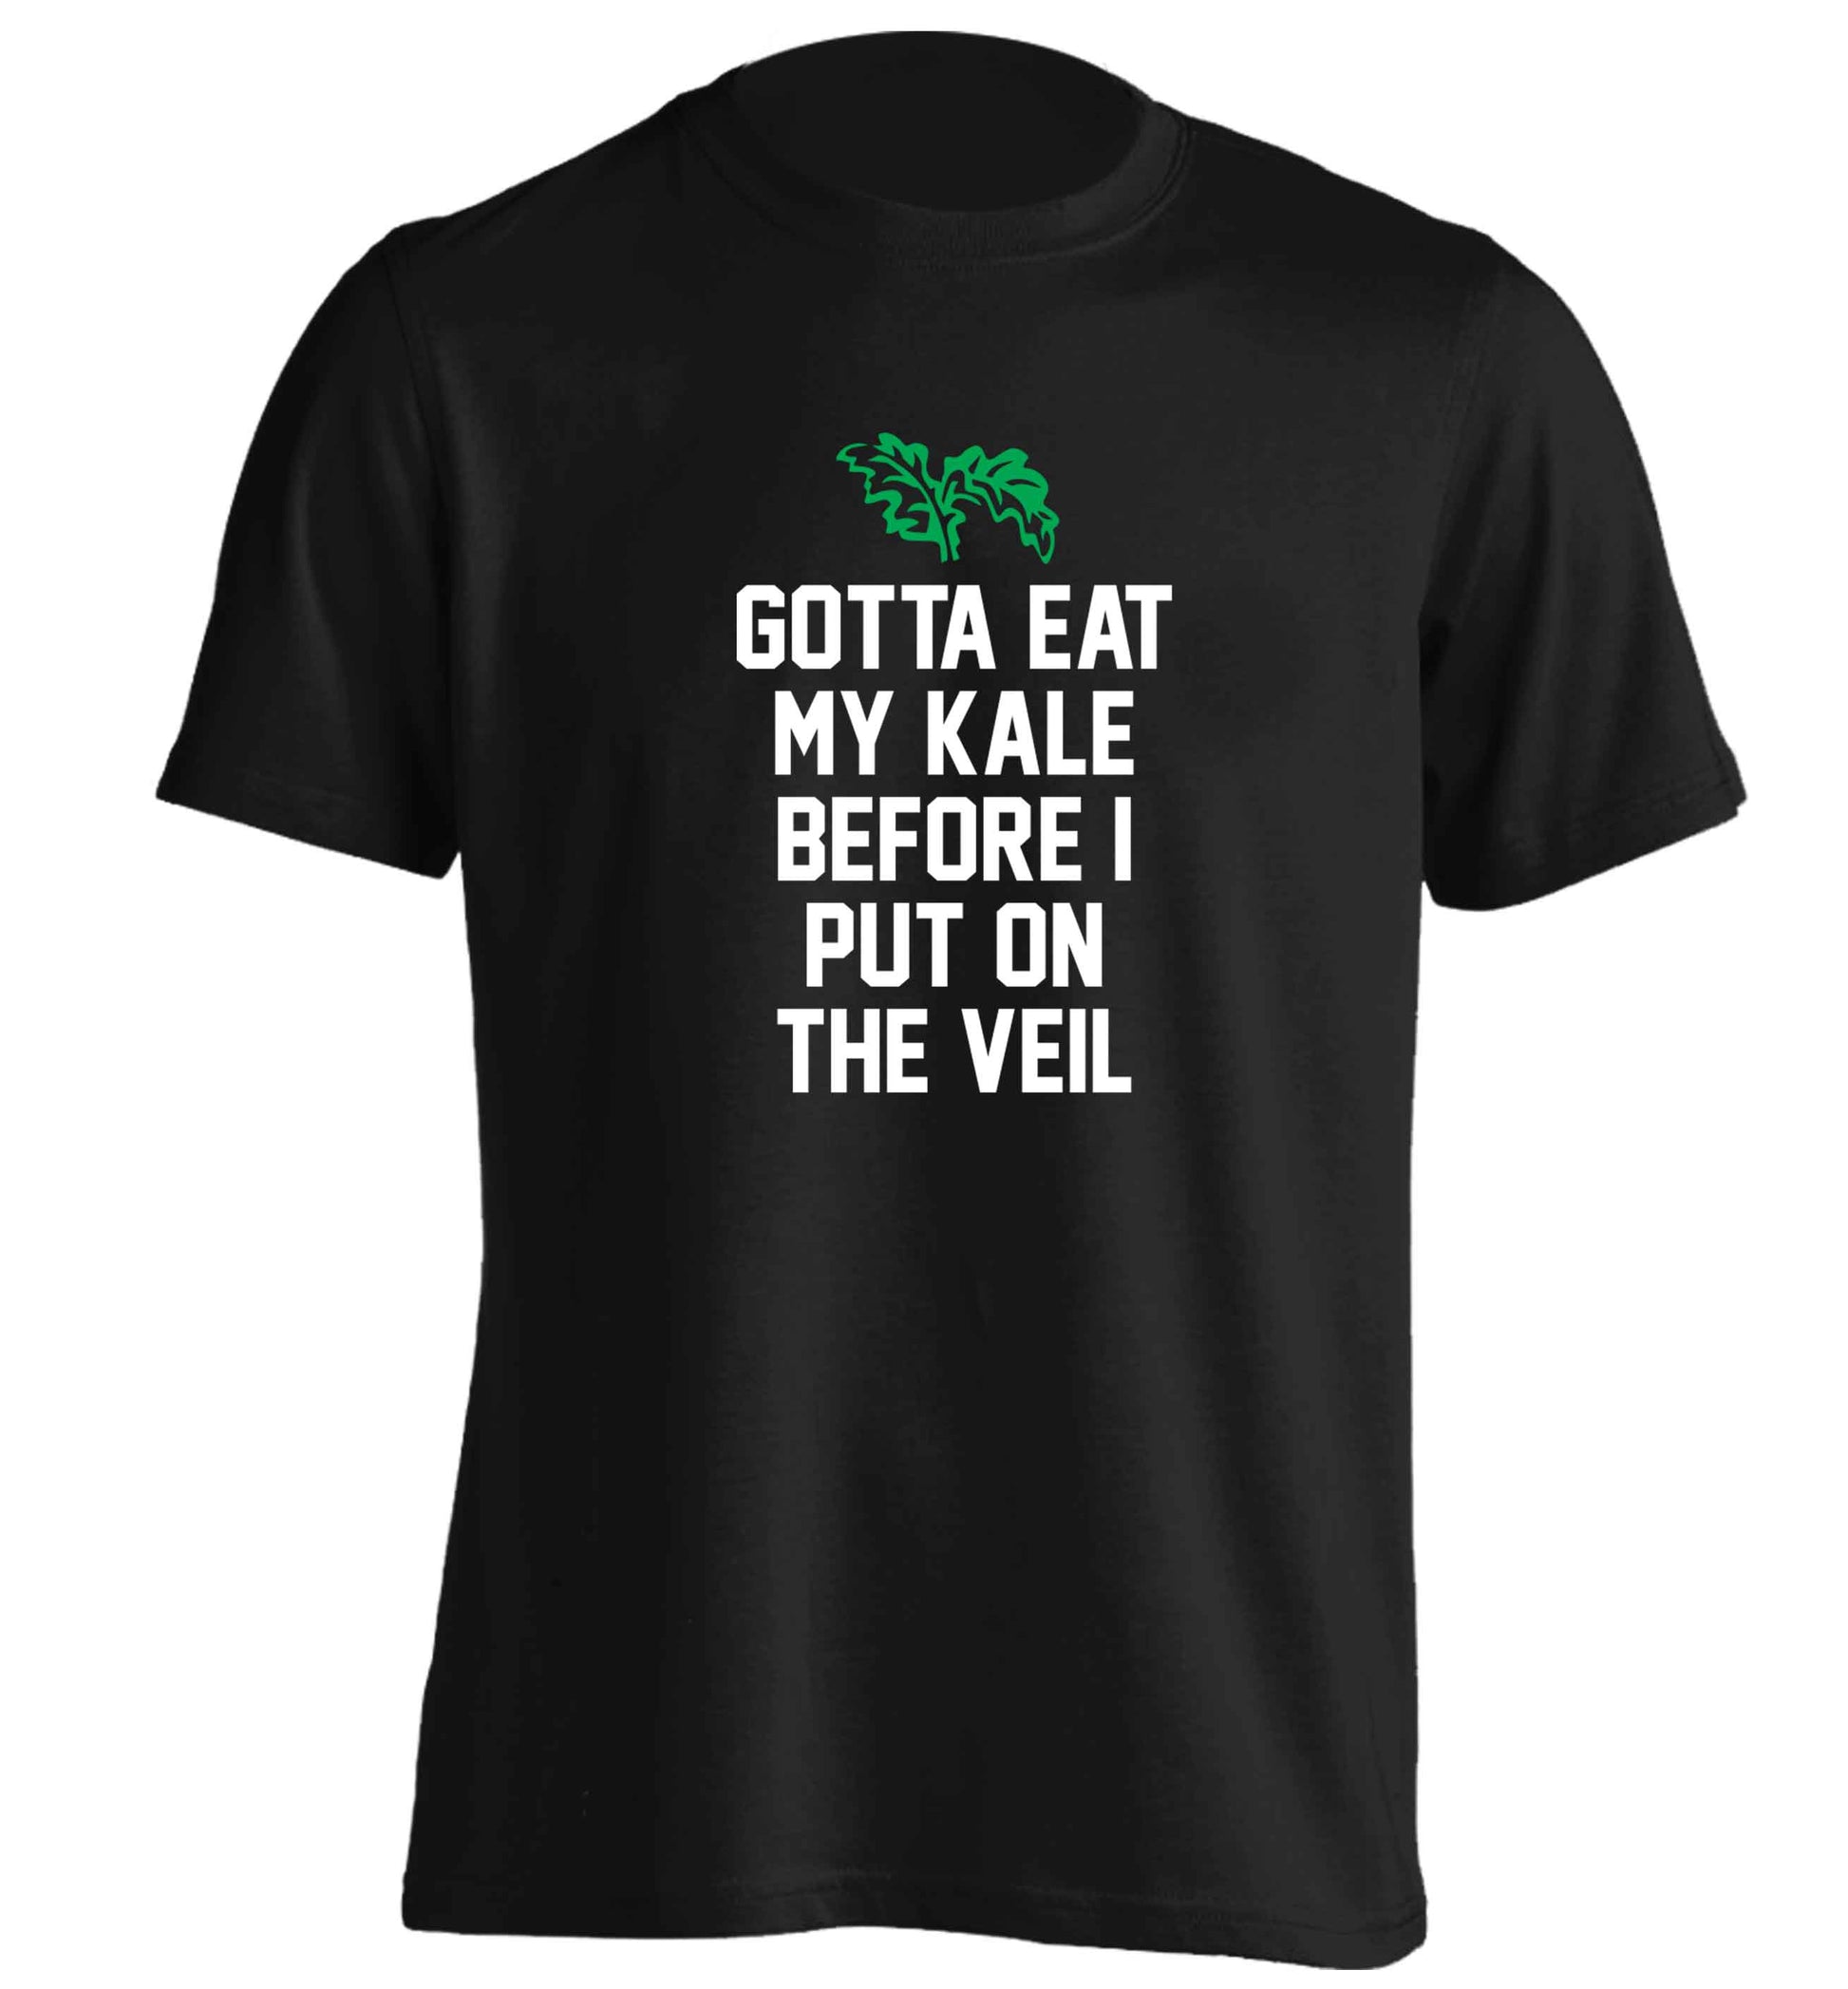 Gotta eat my kale before I put on the veil adults unisex black Tshirt 2XL